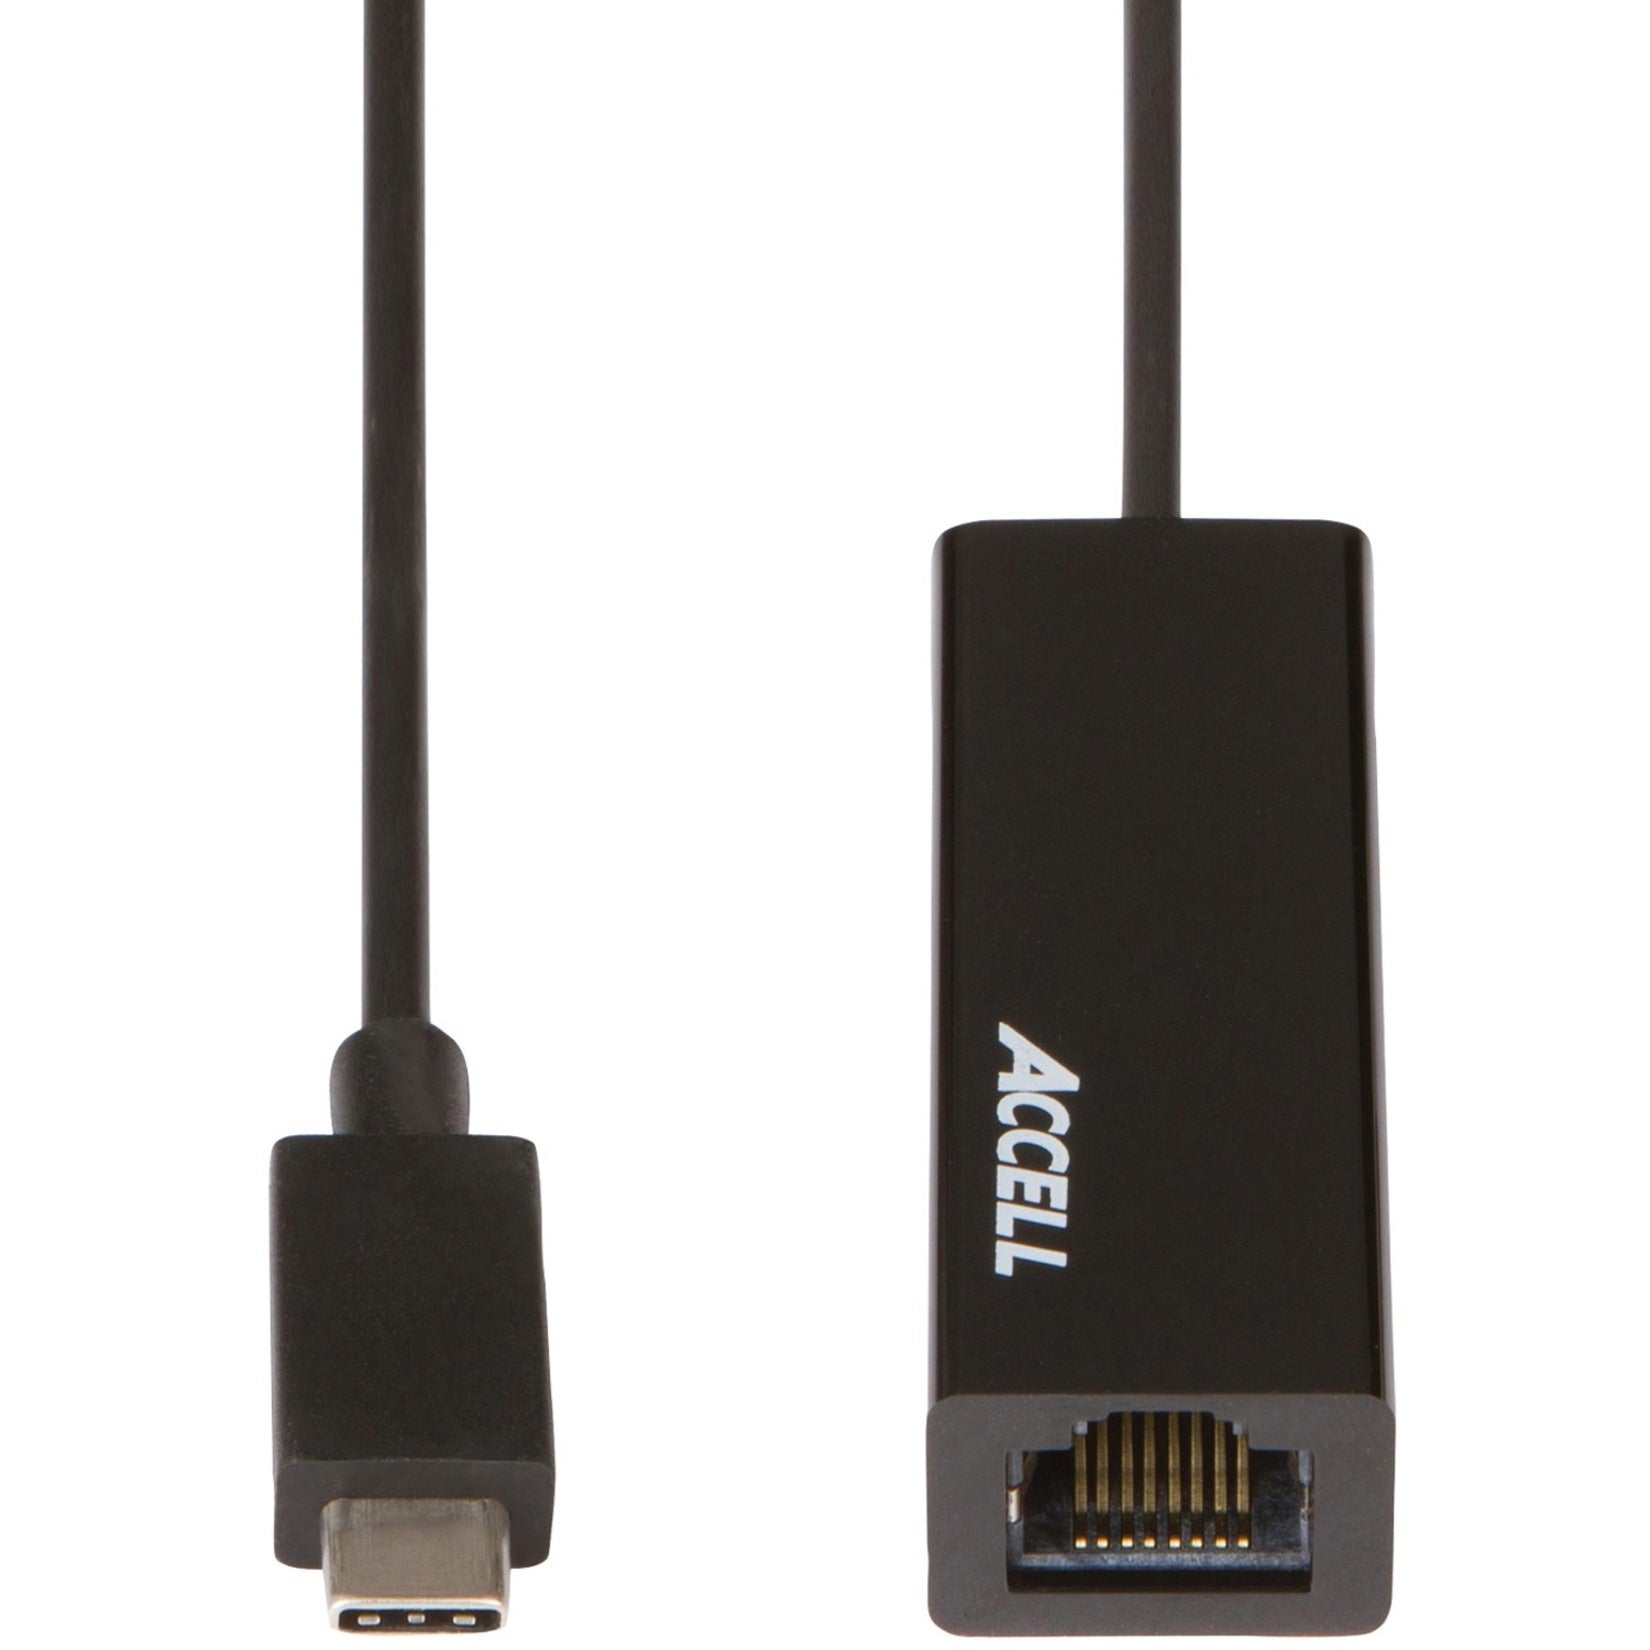 Accell U187B-001B USB-C to Gigabit Ethernet Adapter 2 Jahre Garantie USB 30 Twisted Pair 10/100/1000Base-T